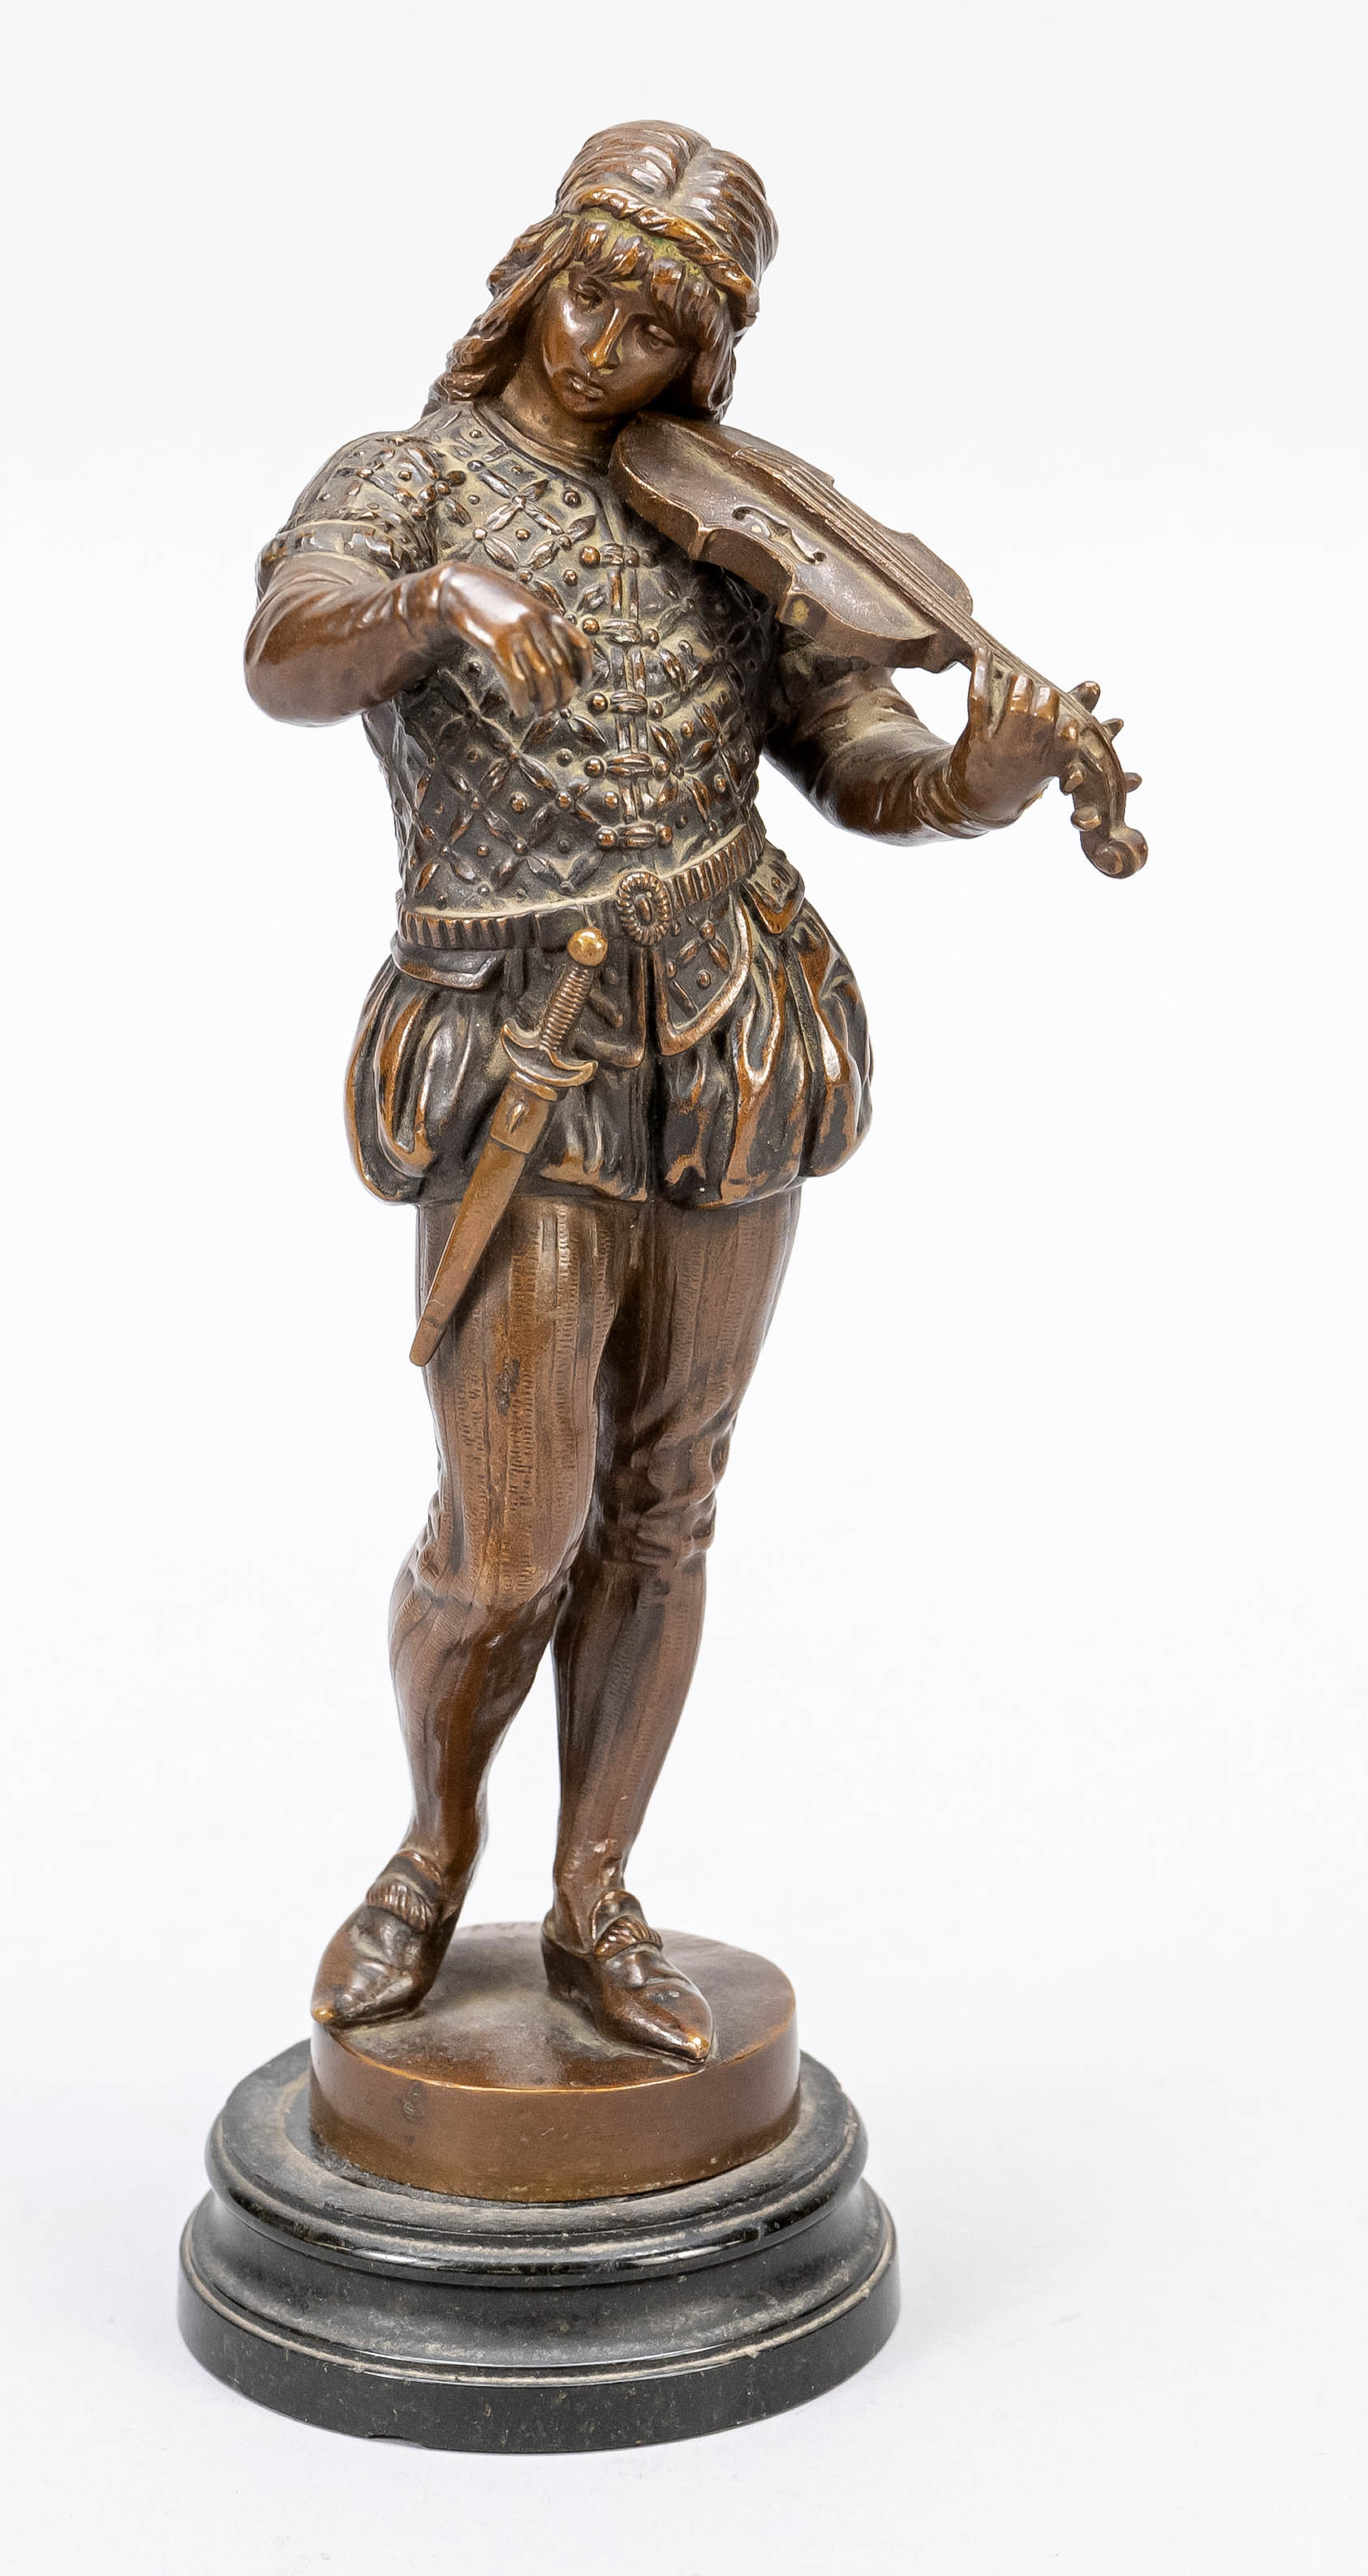 Sculptor around 1900, violinist in medieval costume, brown patinated bronze on round stone base,